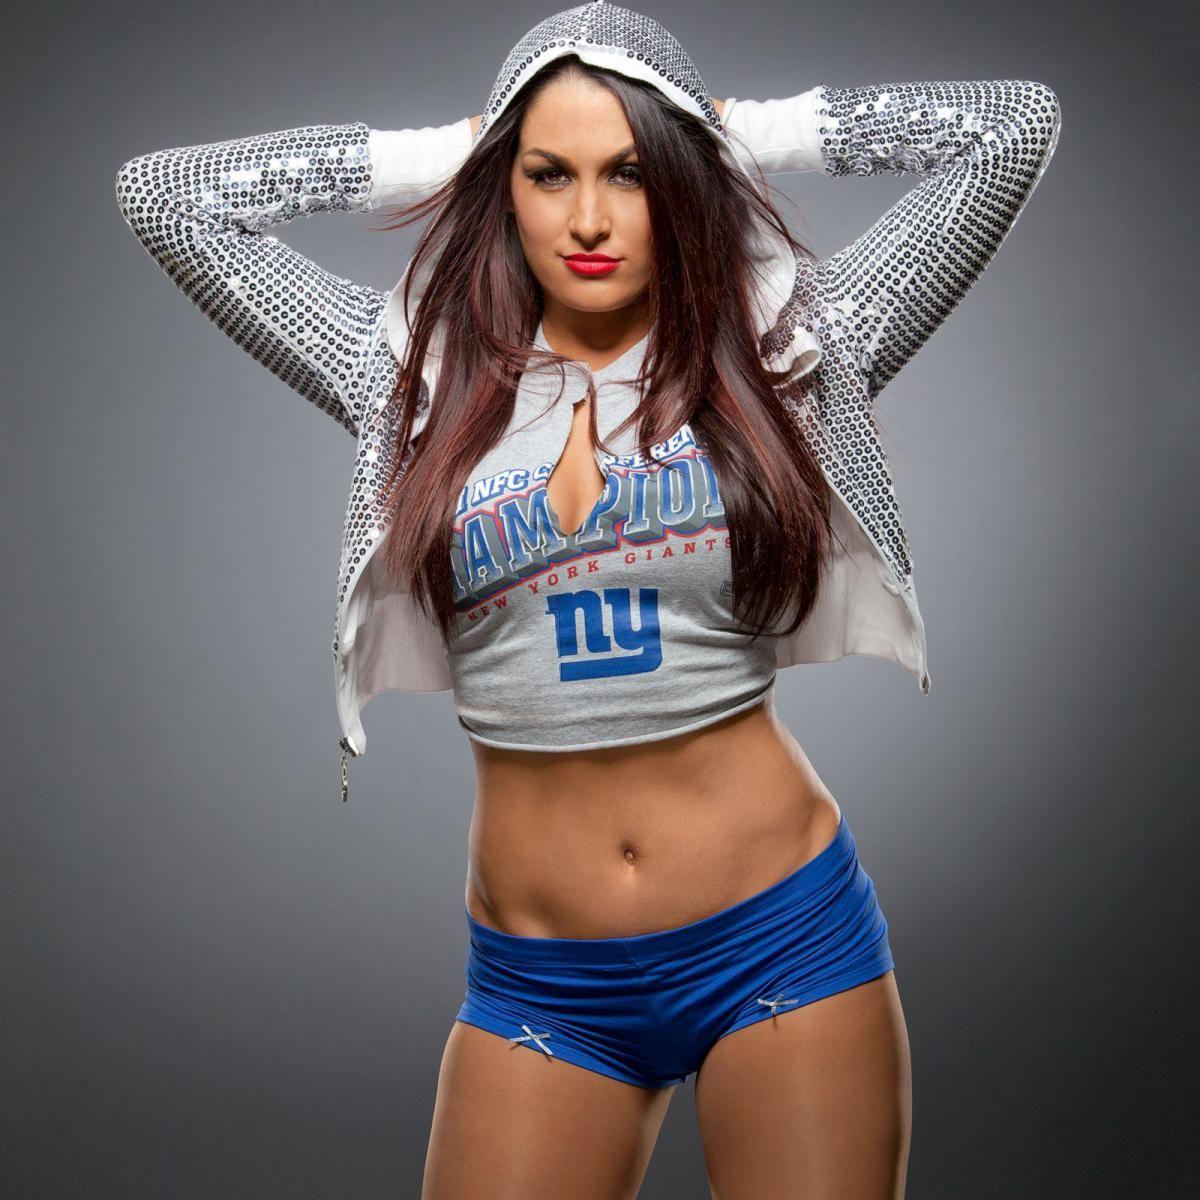 75+ Hot Pictures Of Nikki Bella WWE Diva | Best Of Comic Books